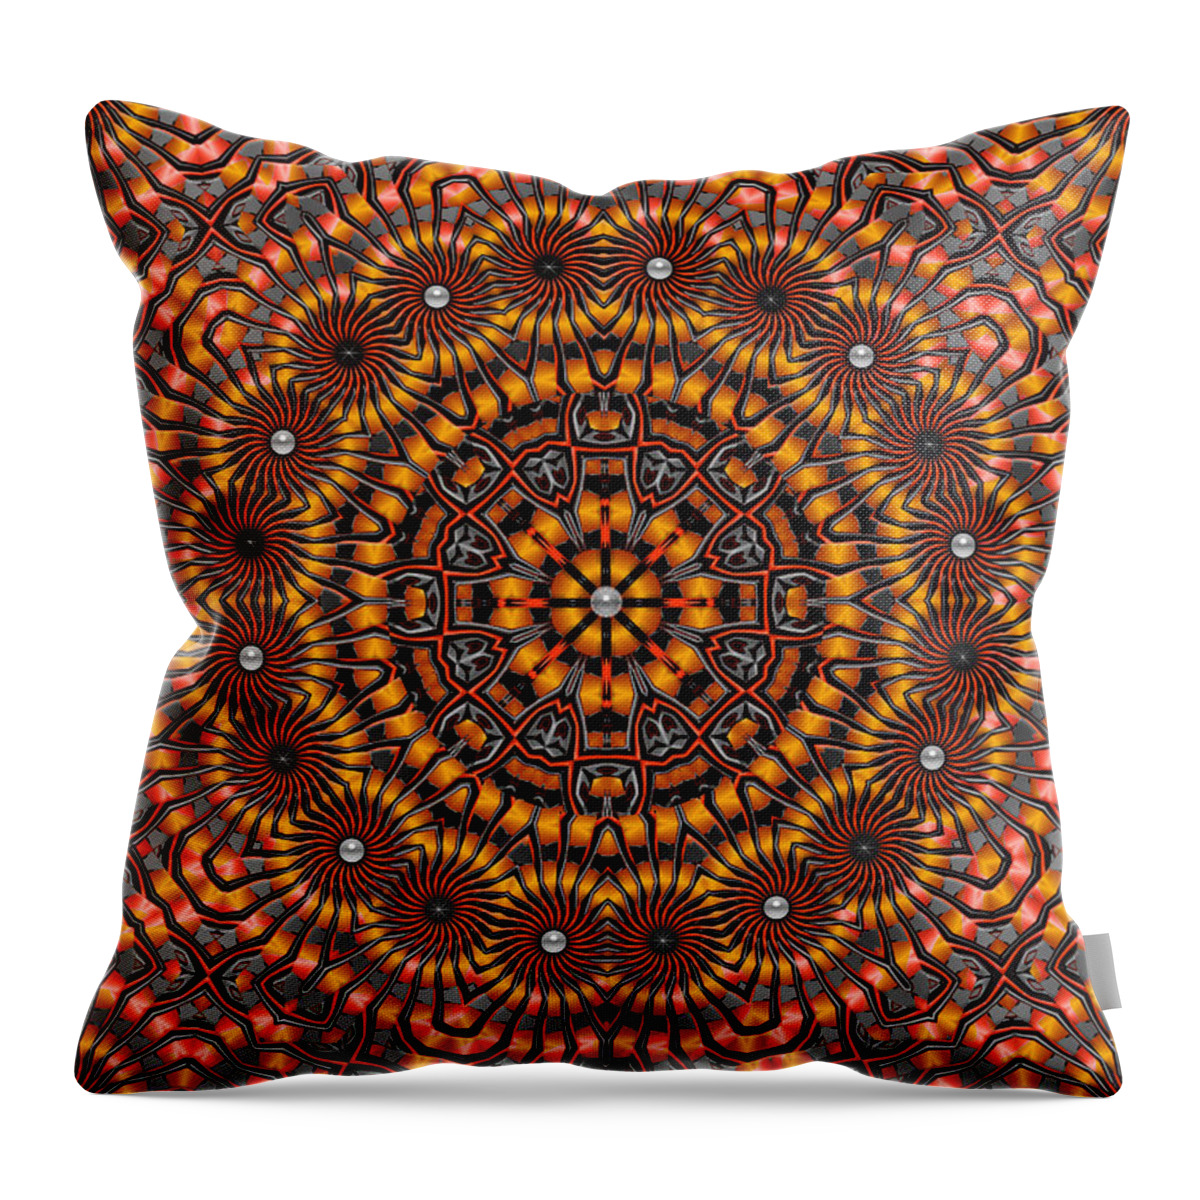 Design Throw Pillow featuring the digital art Morocco- by Robert Orinski